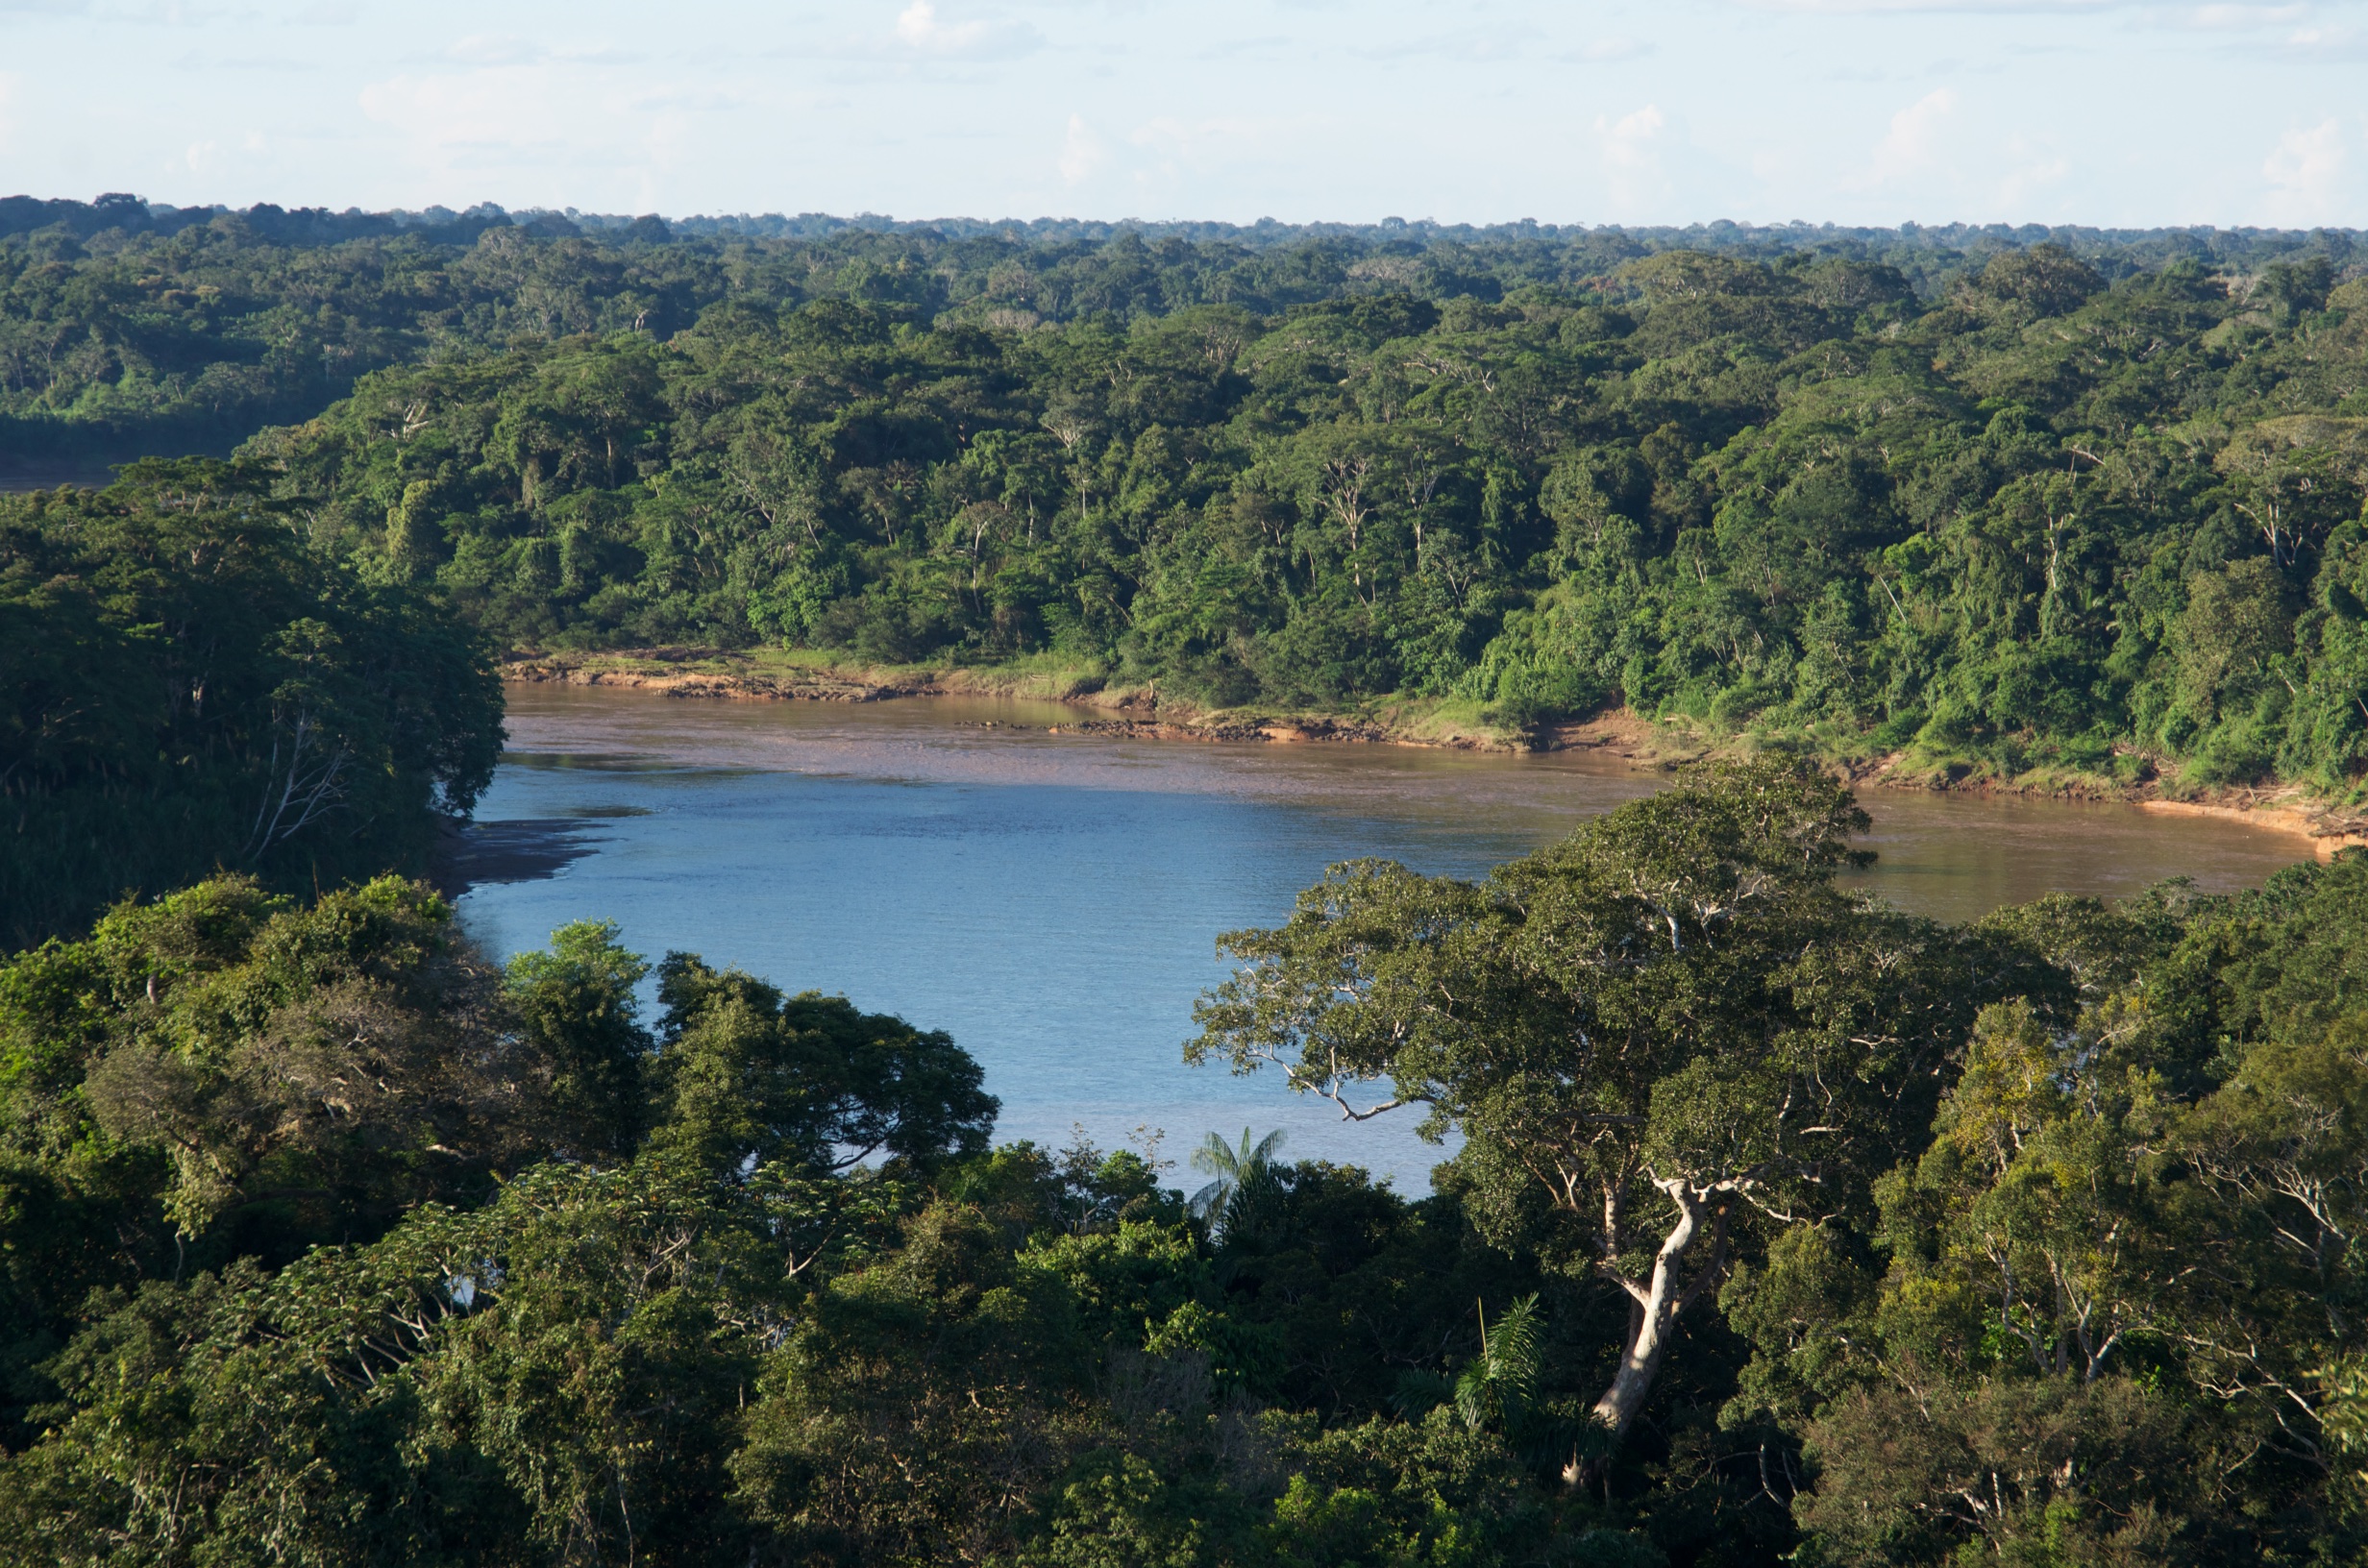  Tambopata River from the Tower, Posada Amazonia, Peru 